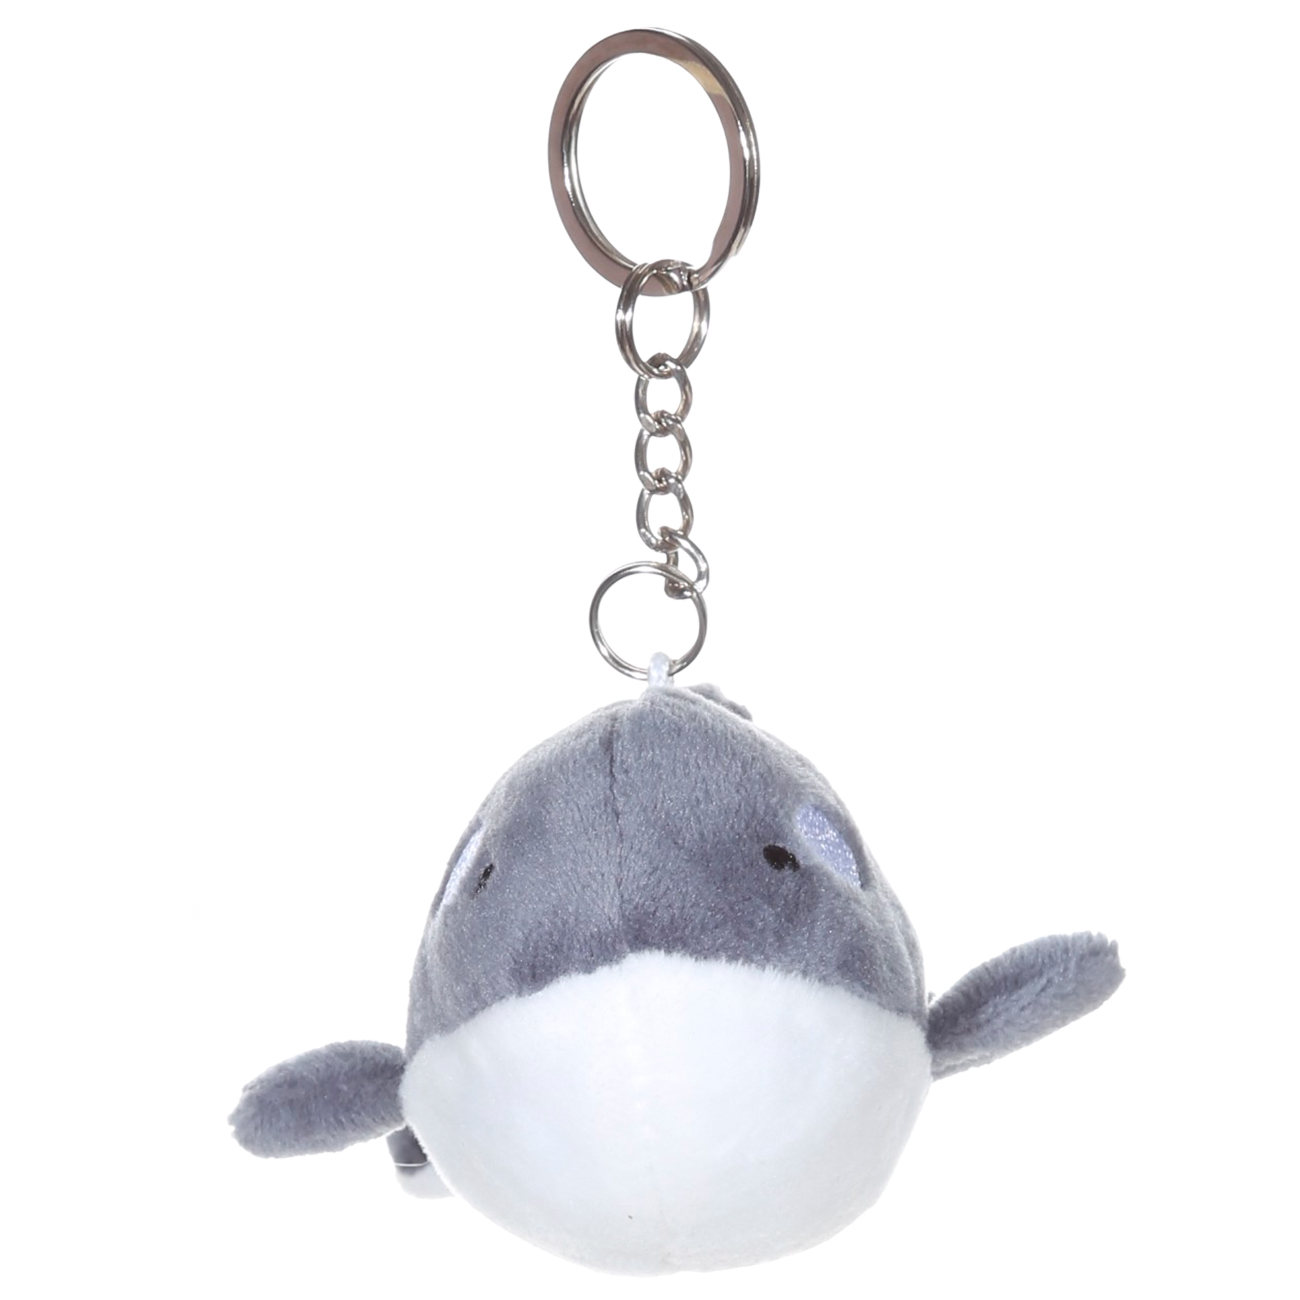 Keychain, 14 cm, soft, polyester / metal, gray, Killer whale, Aquatic animals изображение № 2